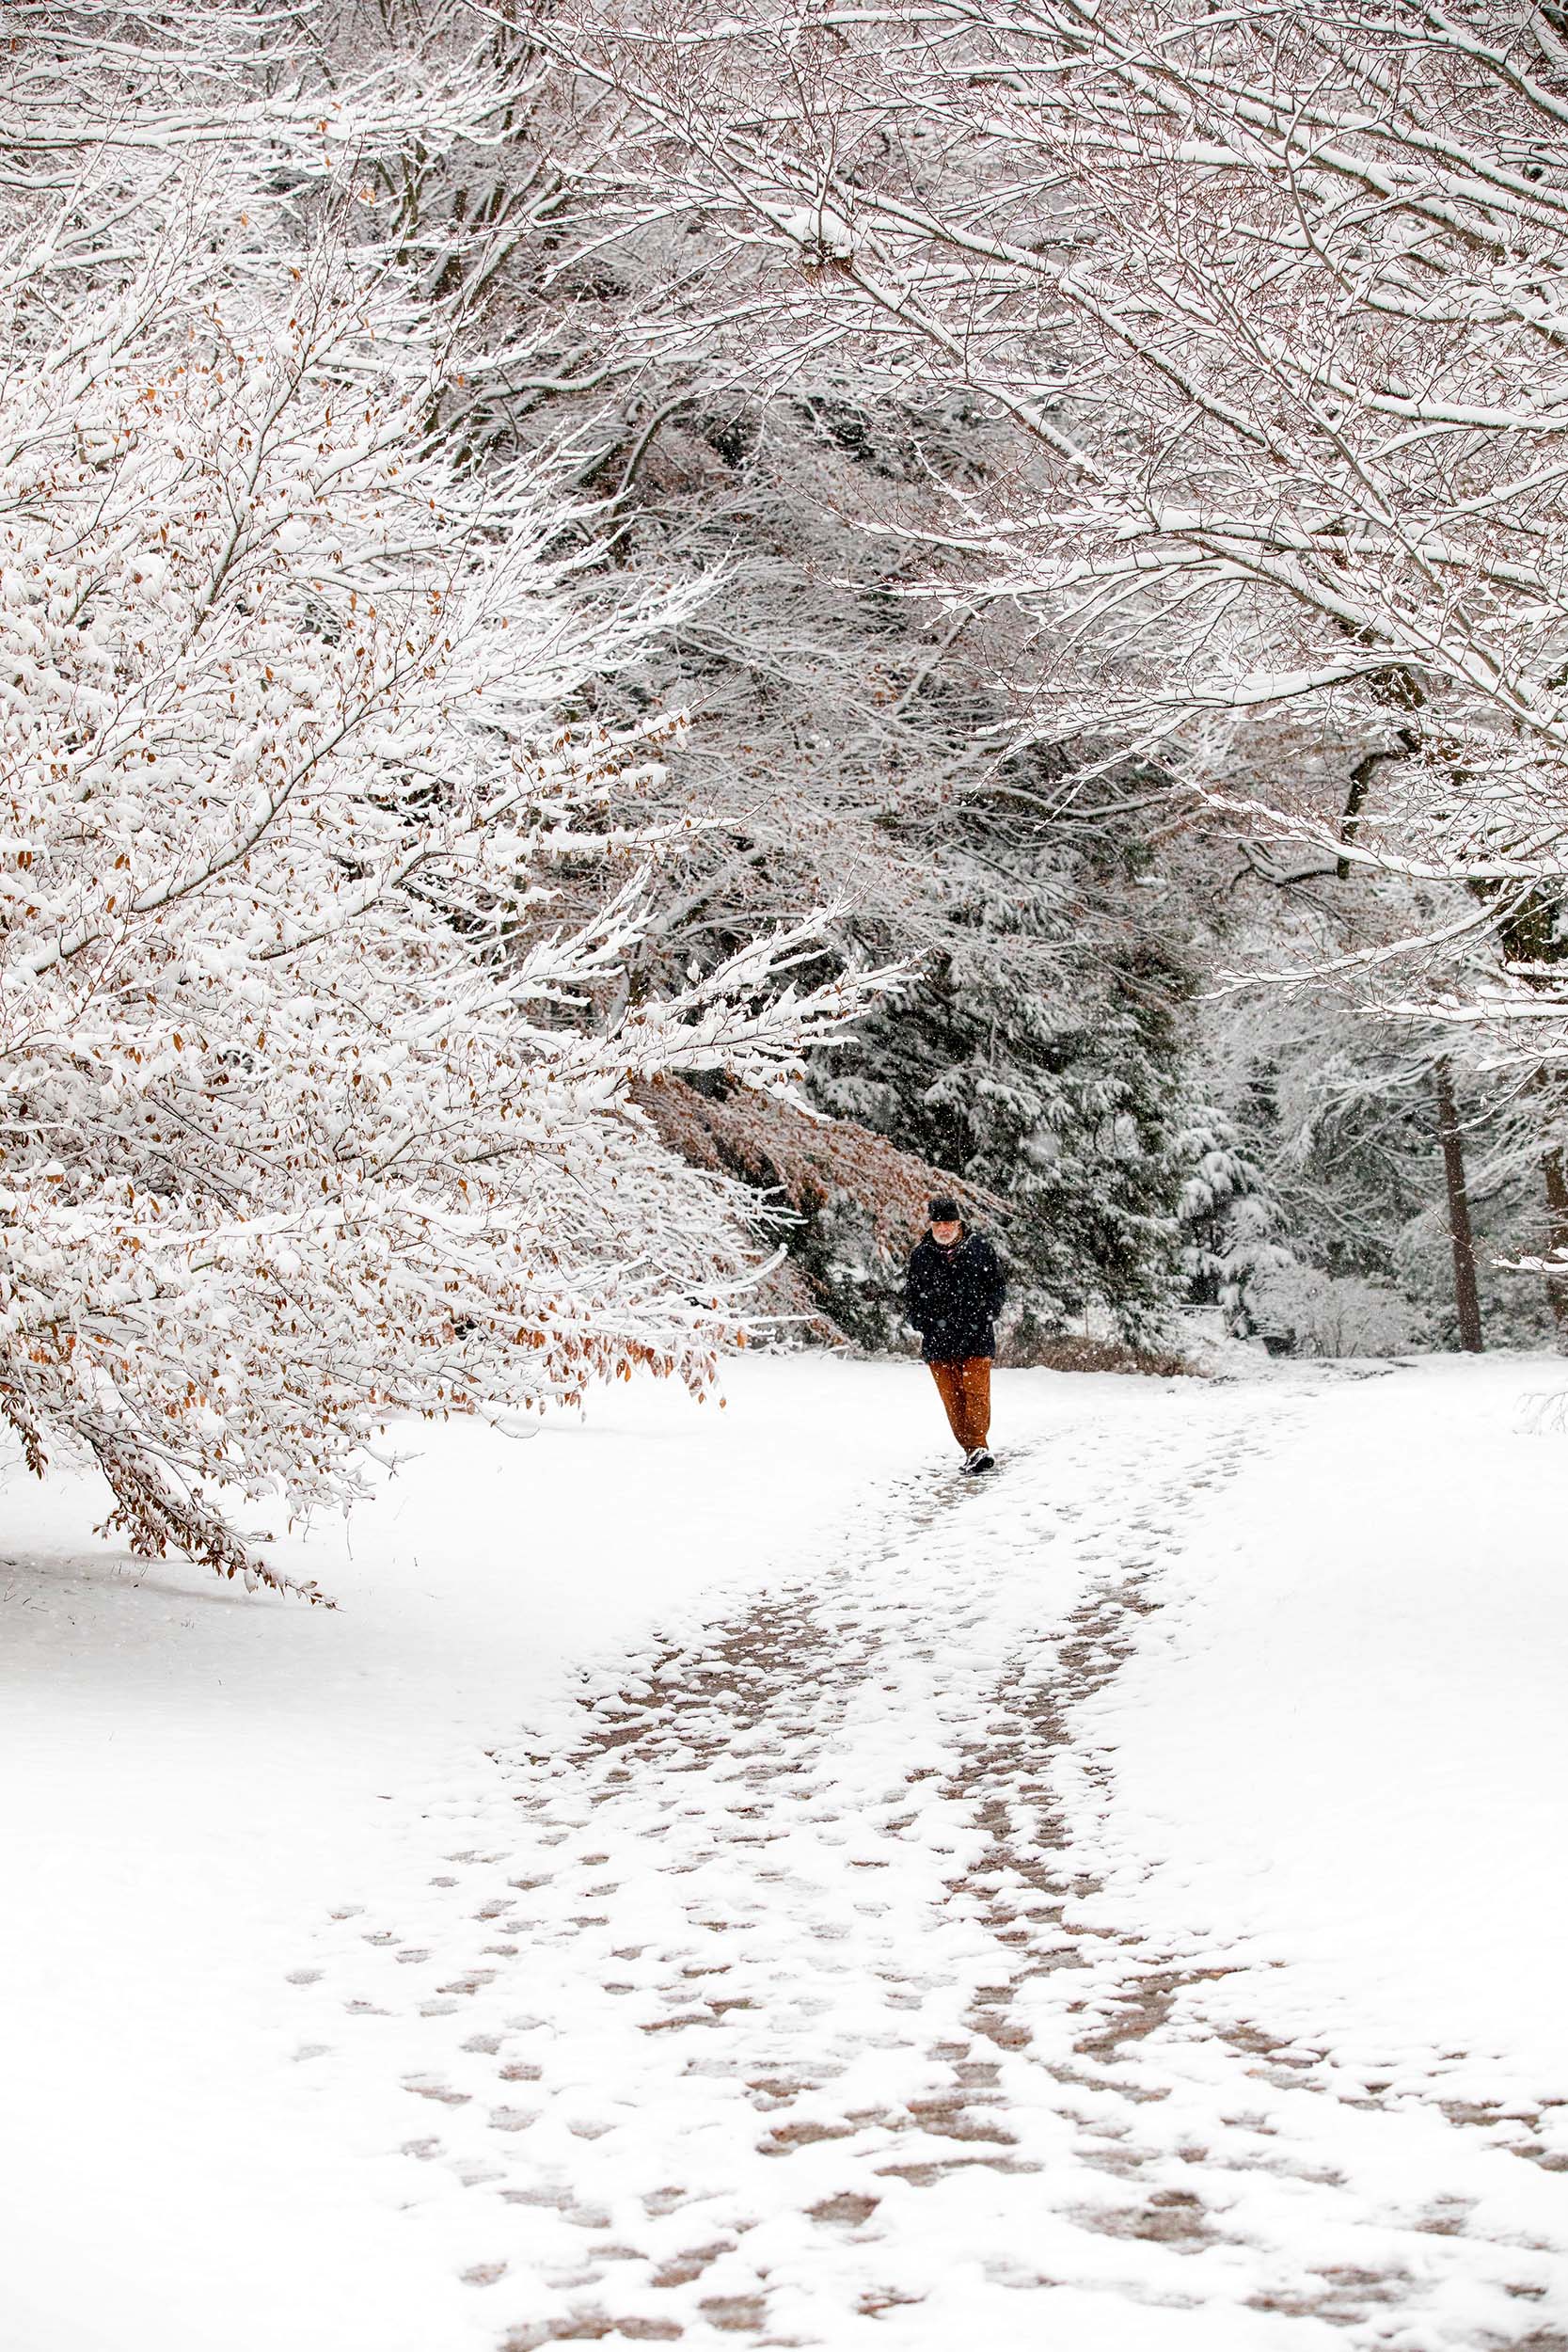 Anthony Apesos of Jamaica Plain walks along a snowy trail.